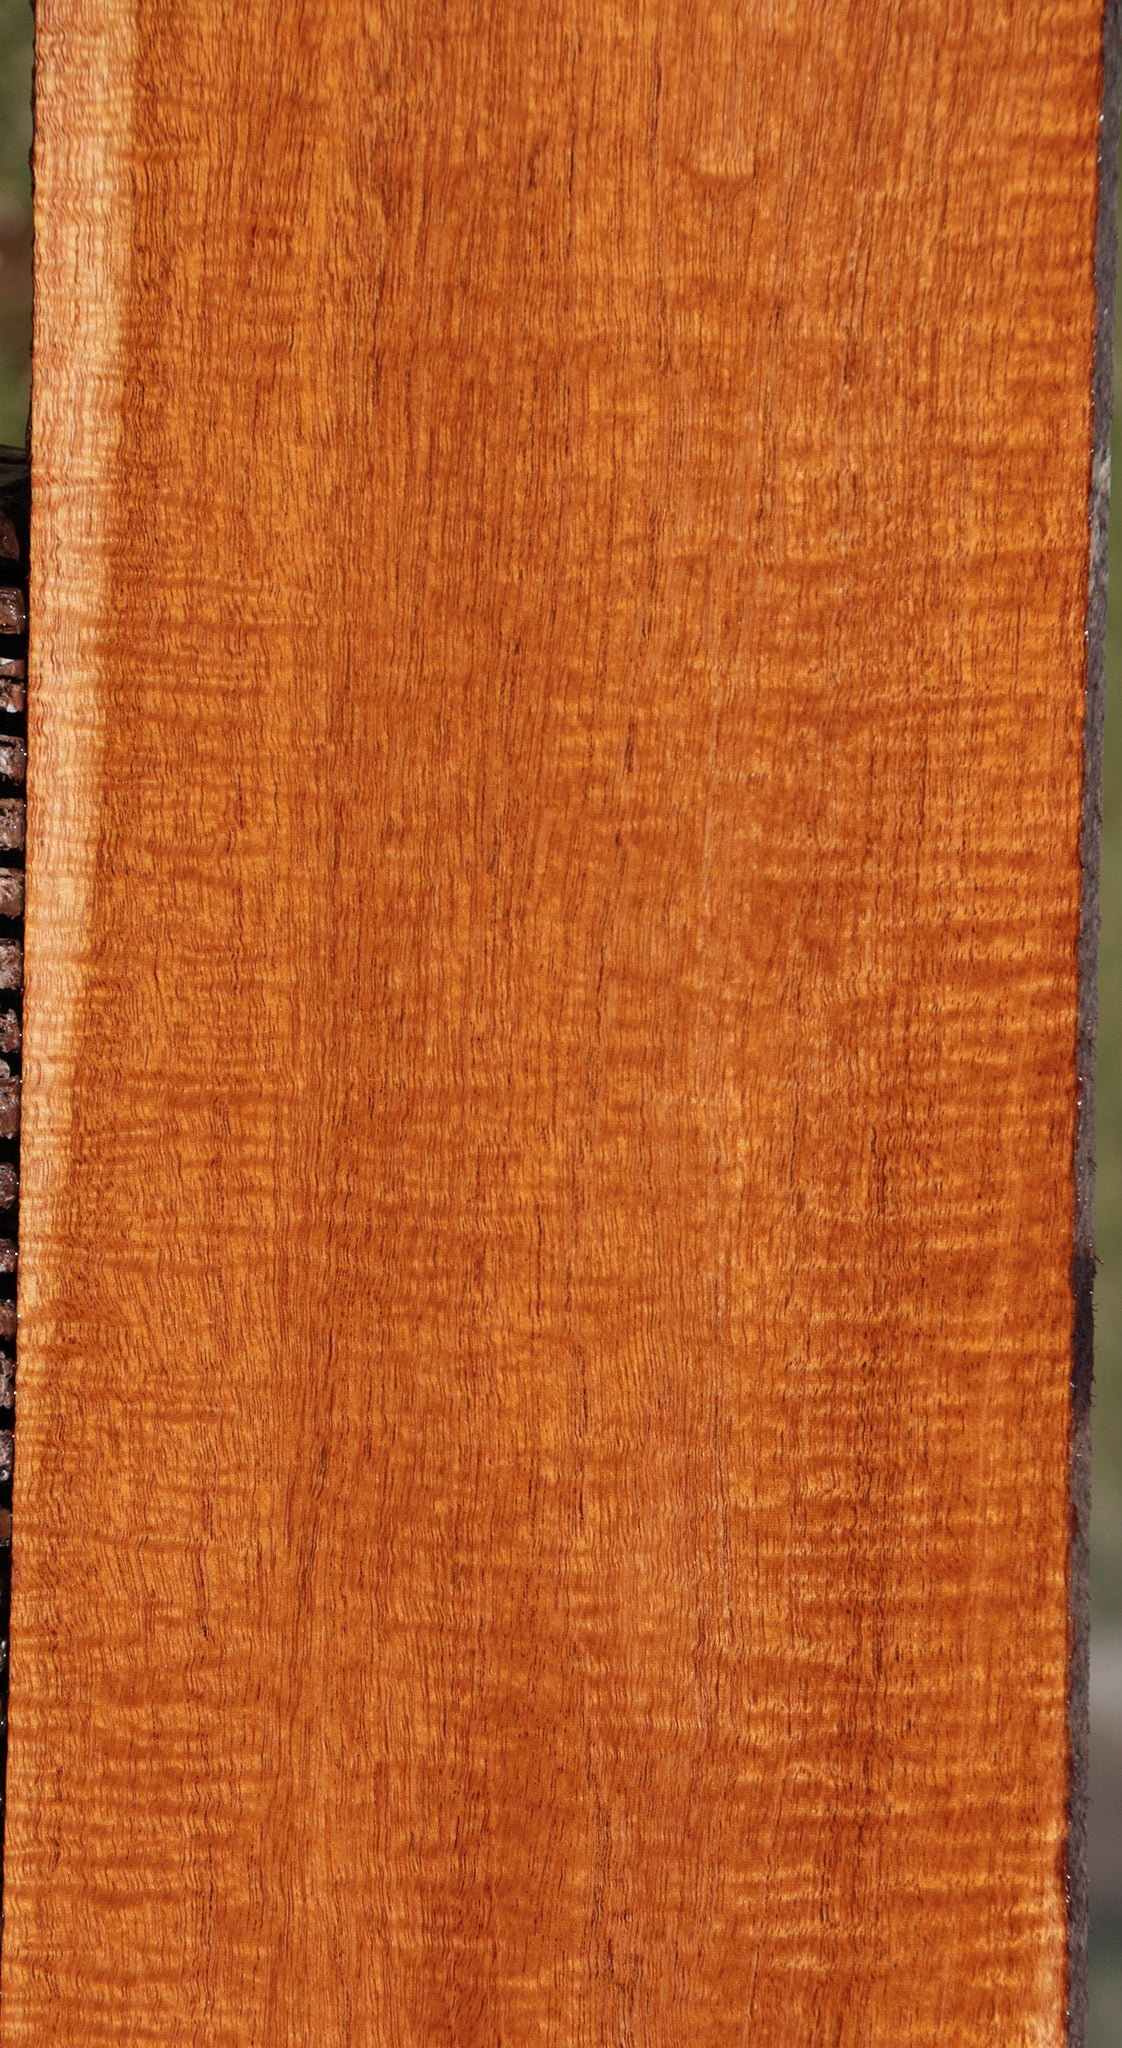 Exhibition Honduras Mahogany Lumber